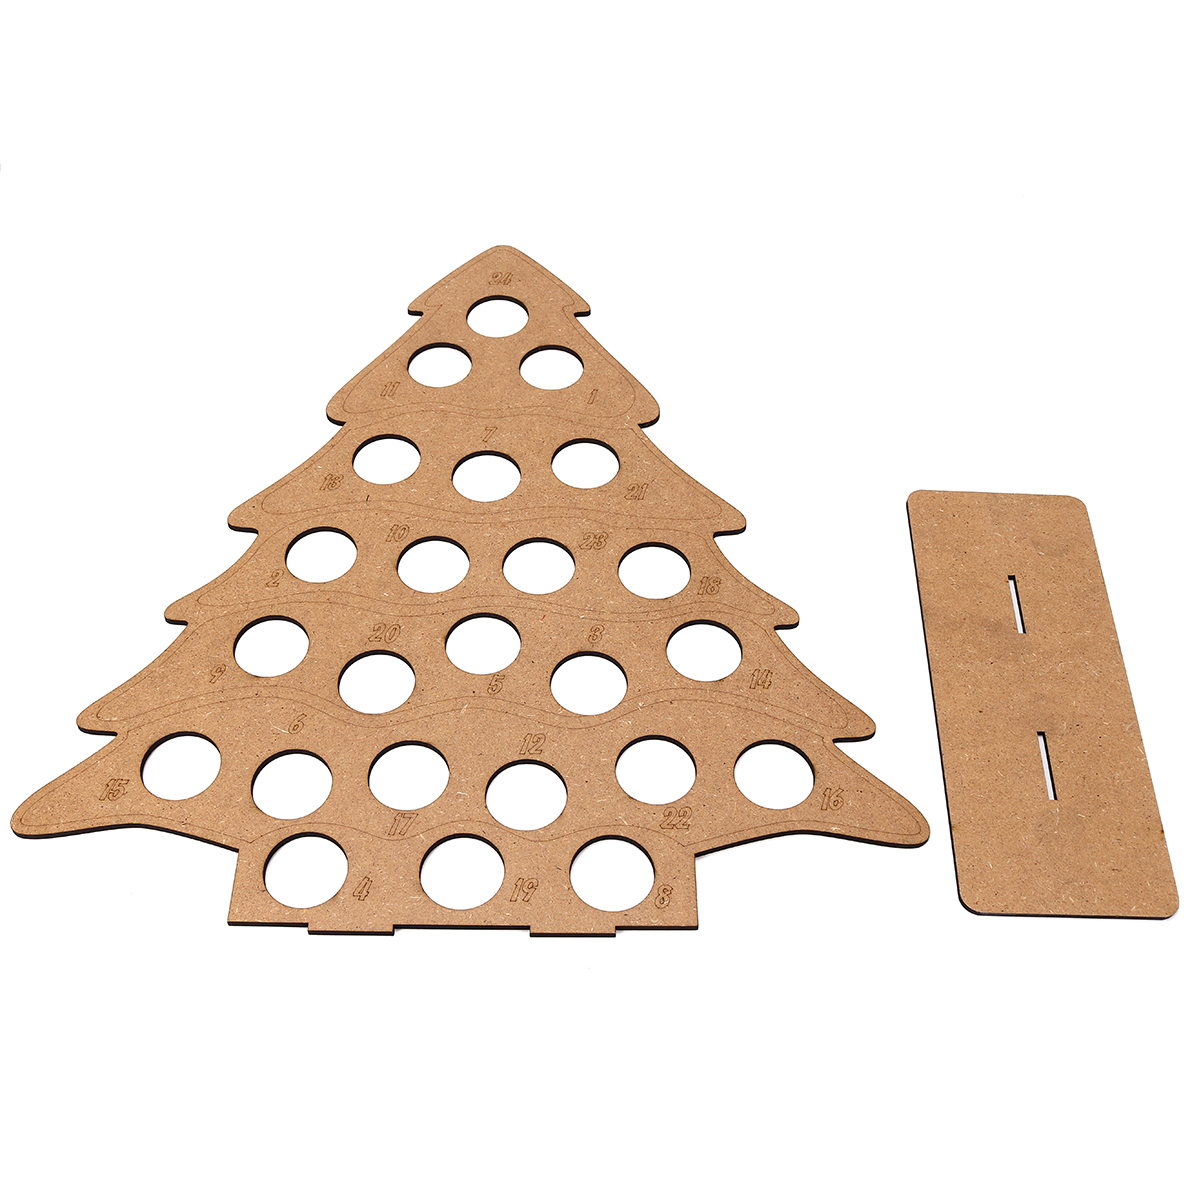 MDF-Wooden-Christmas-Advent-Calendar-Christmas-Tree-Decoration-Fits-24-Circular-Chocolates-Candy-Sta-1587877-6